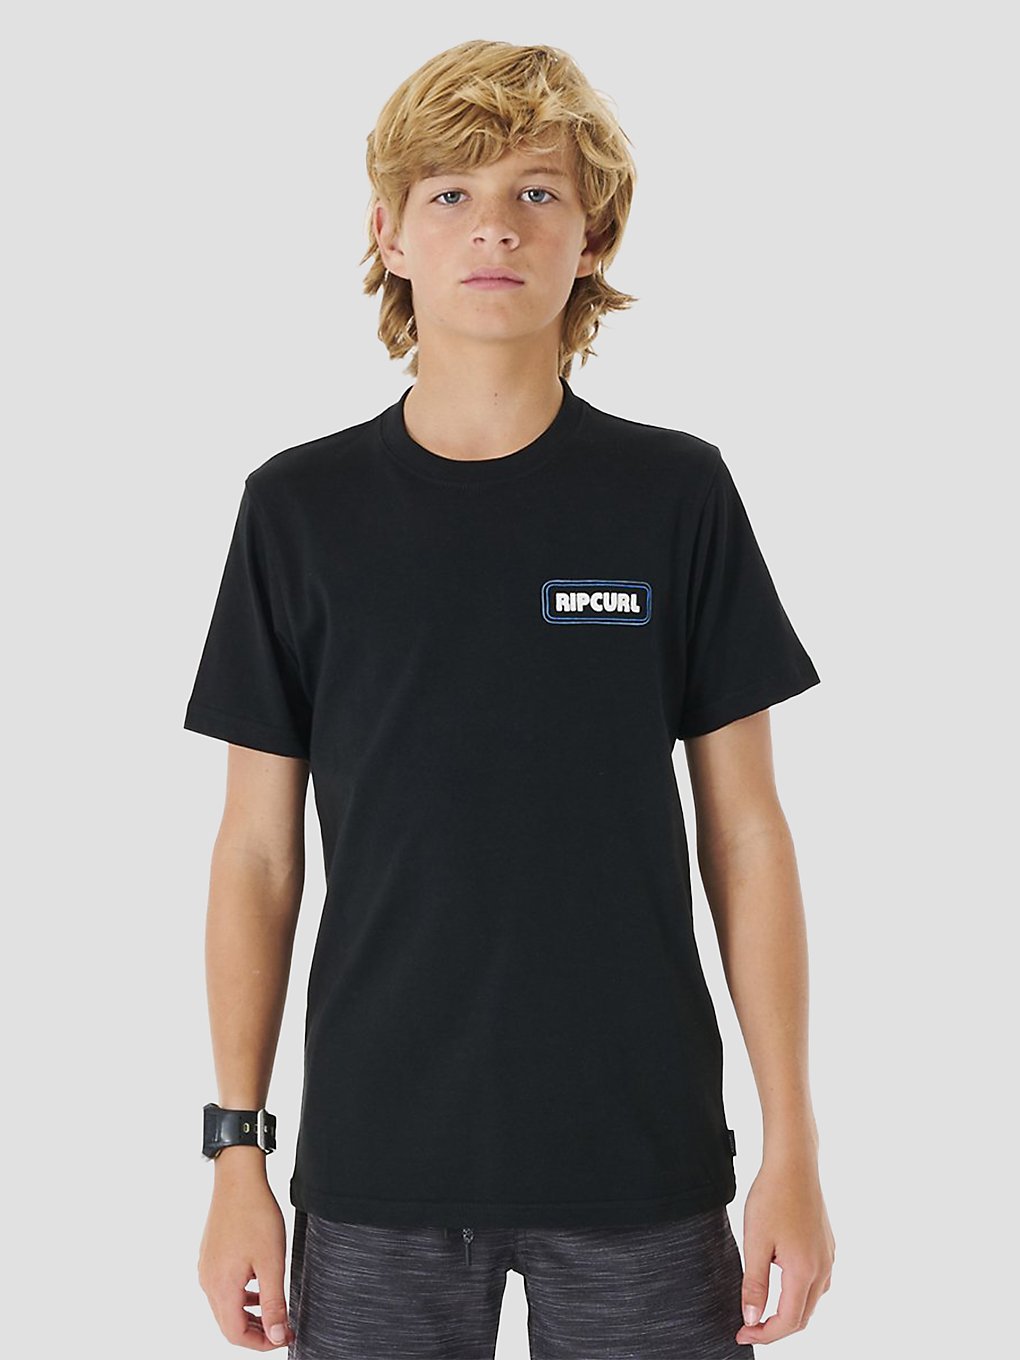 Rip Curl Surf Revivial Sunset T-Shirt black kaufen